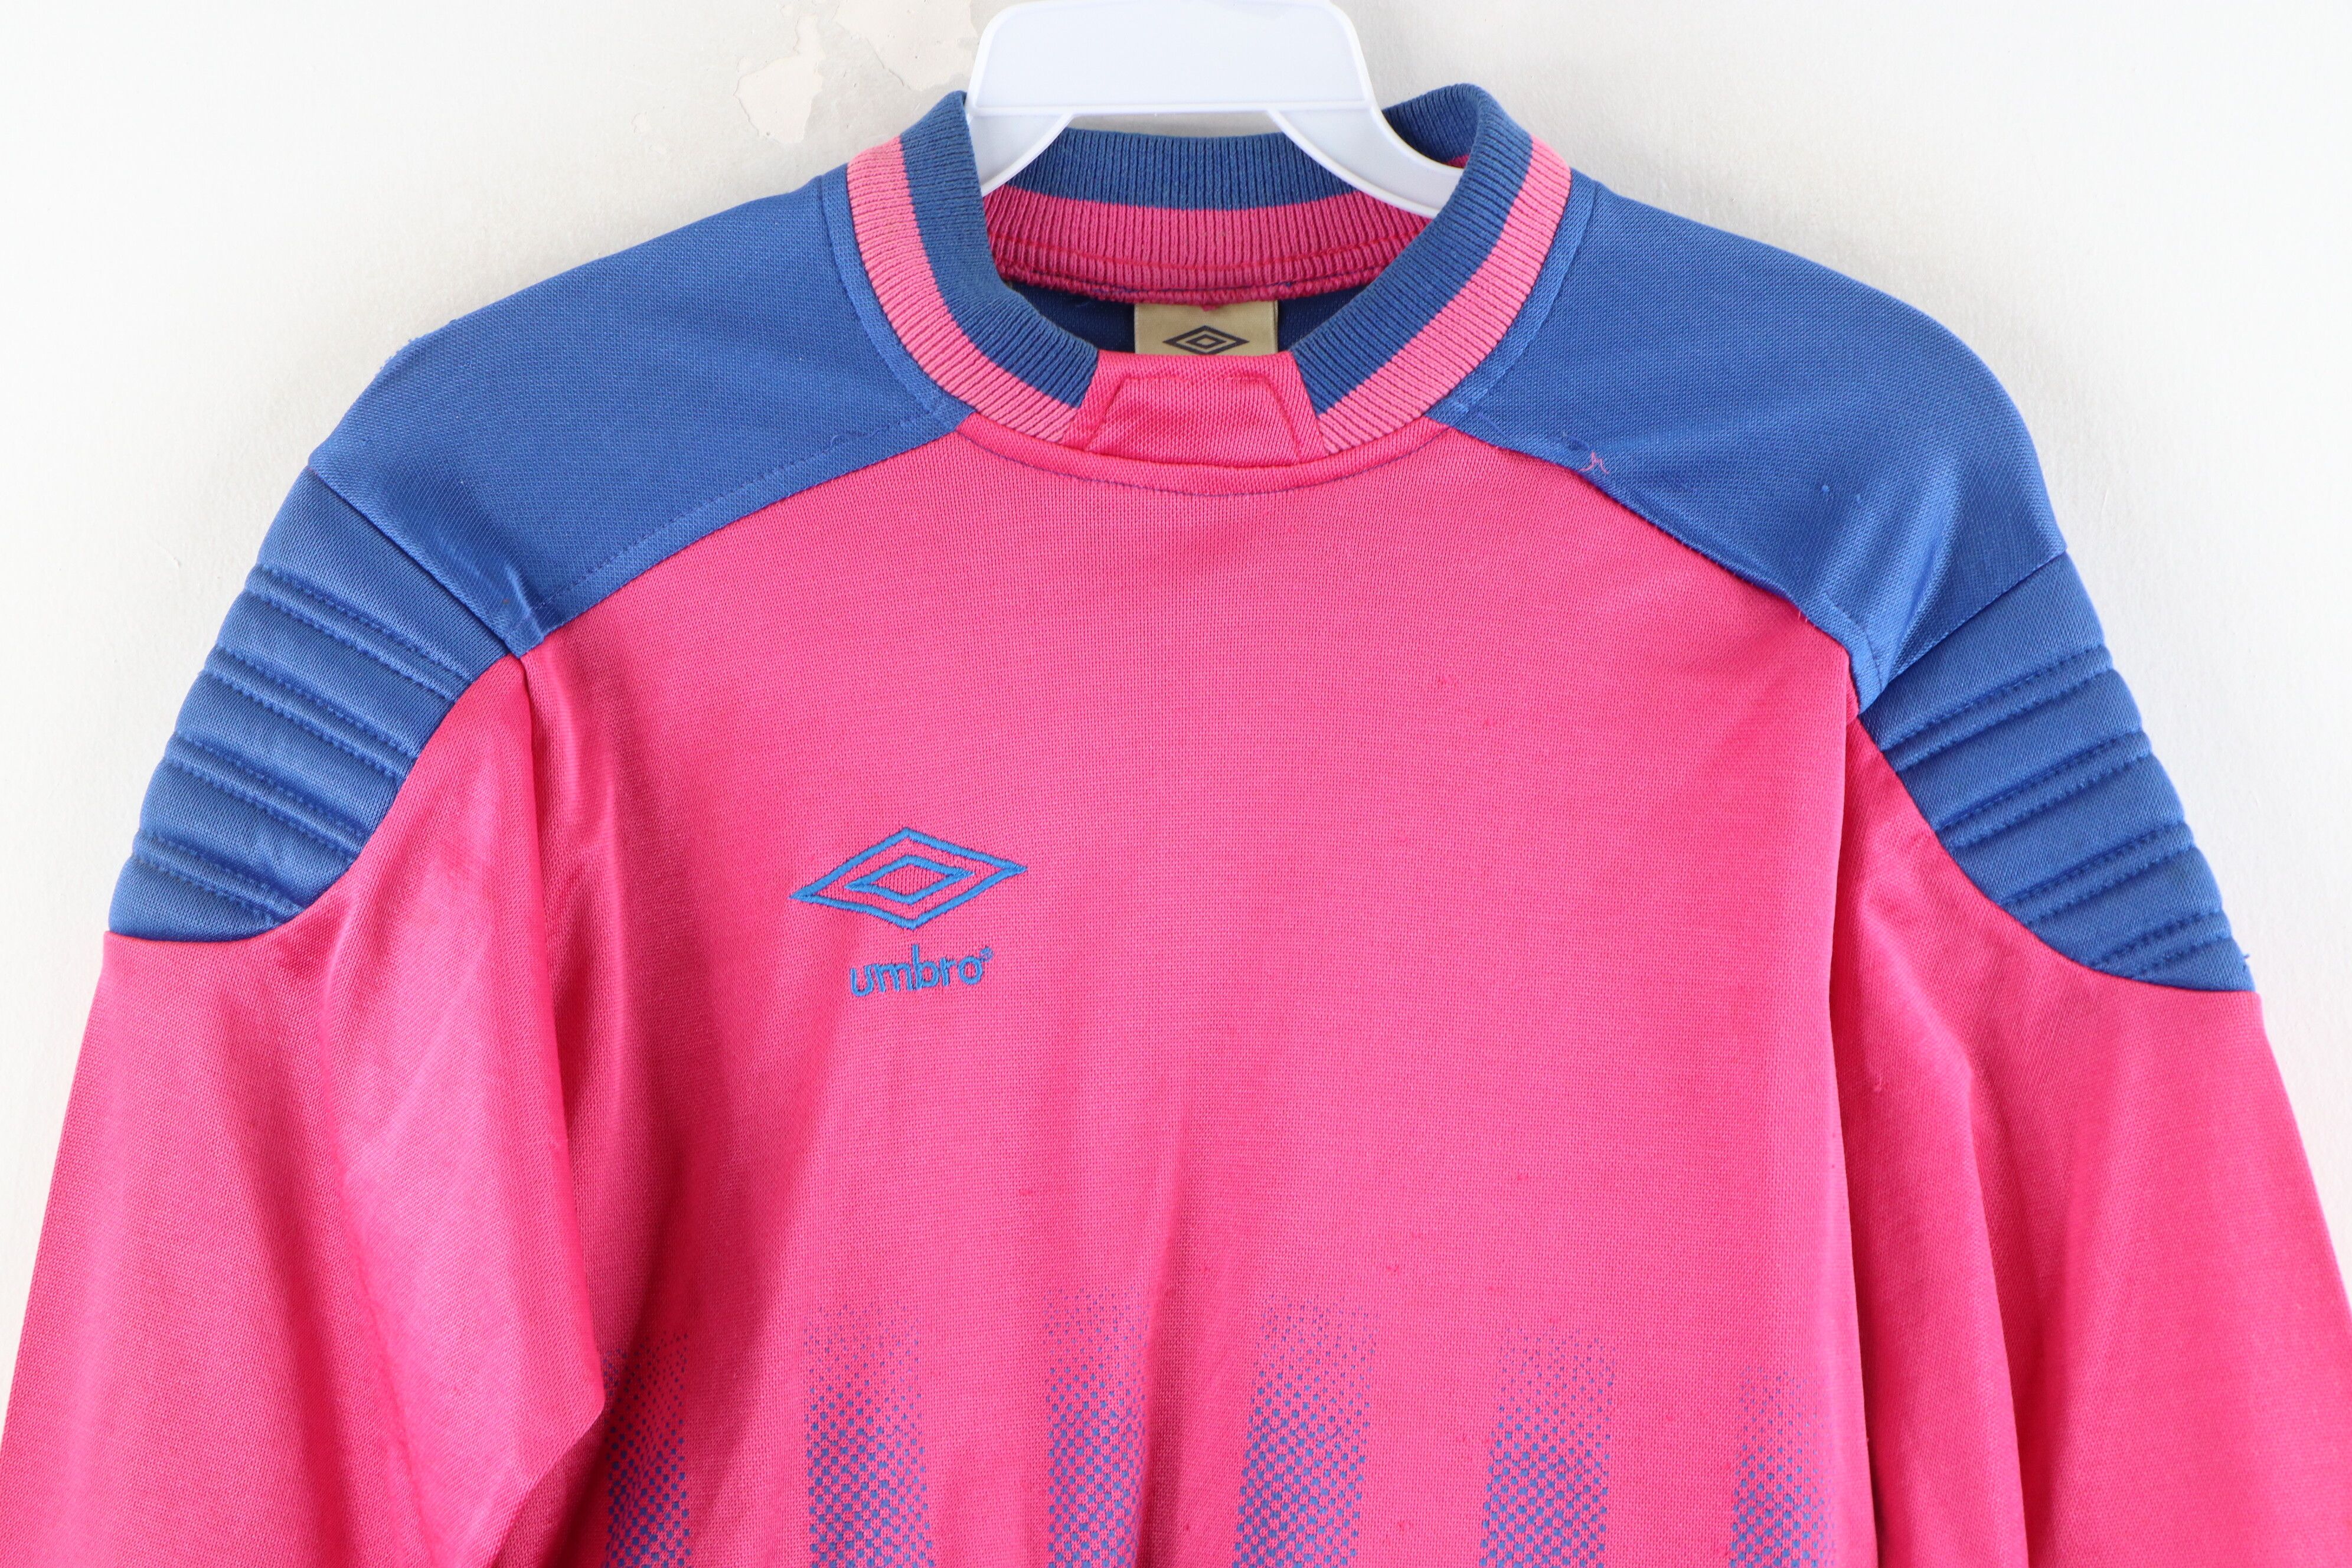 Vintage Vintage 90s Umbro Distressed Padded Goalie Jersey Pink USA Size US S / EU 44-46 / 1 - 2 Preview